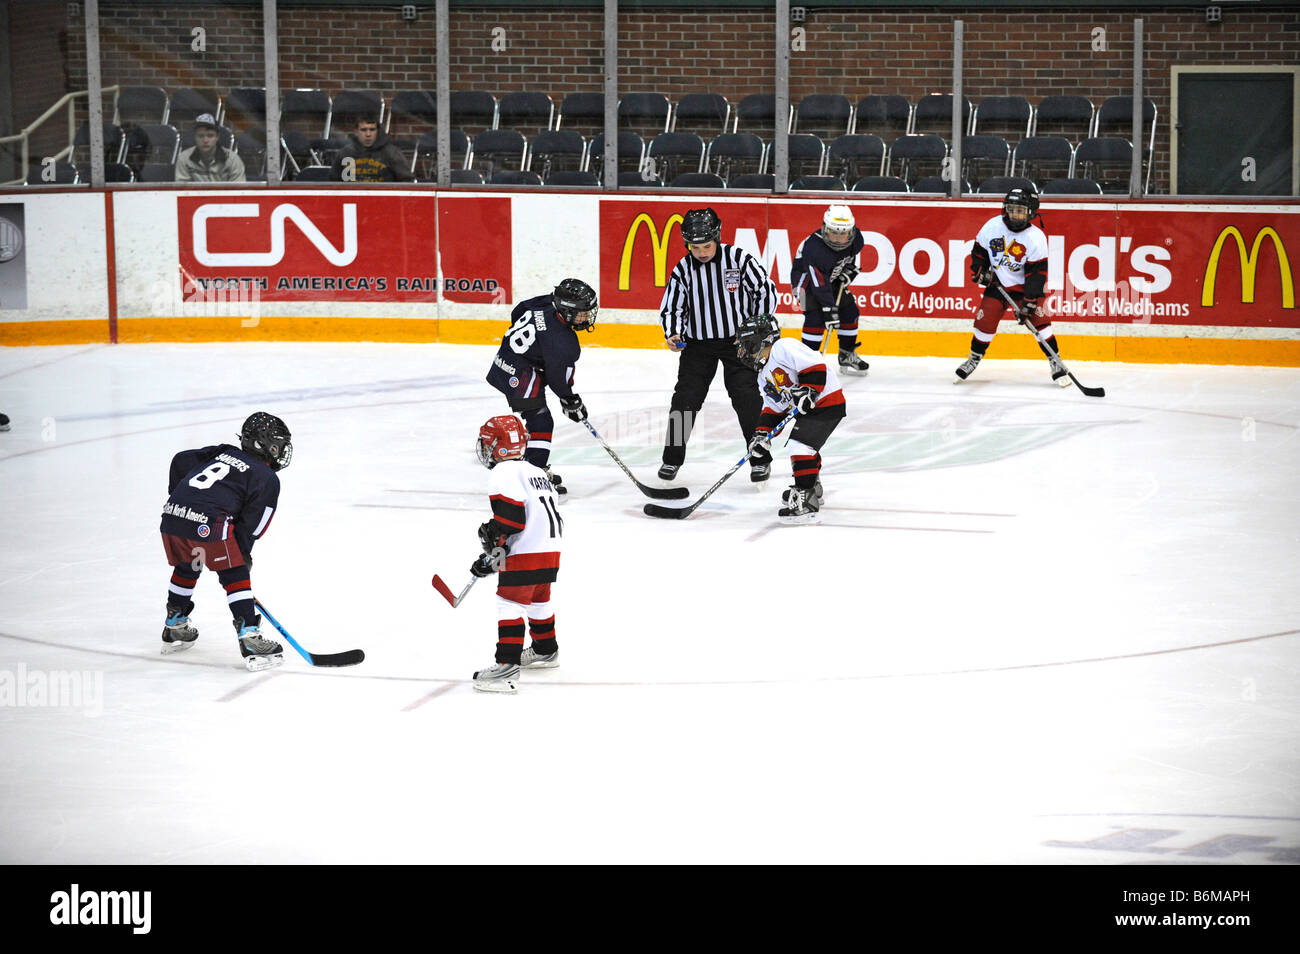 7 year old boys and girls play ice hockey Stock Photo